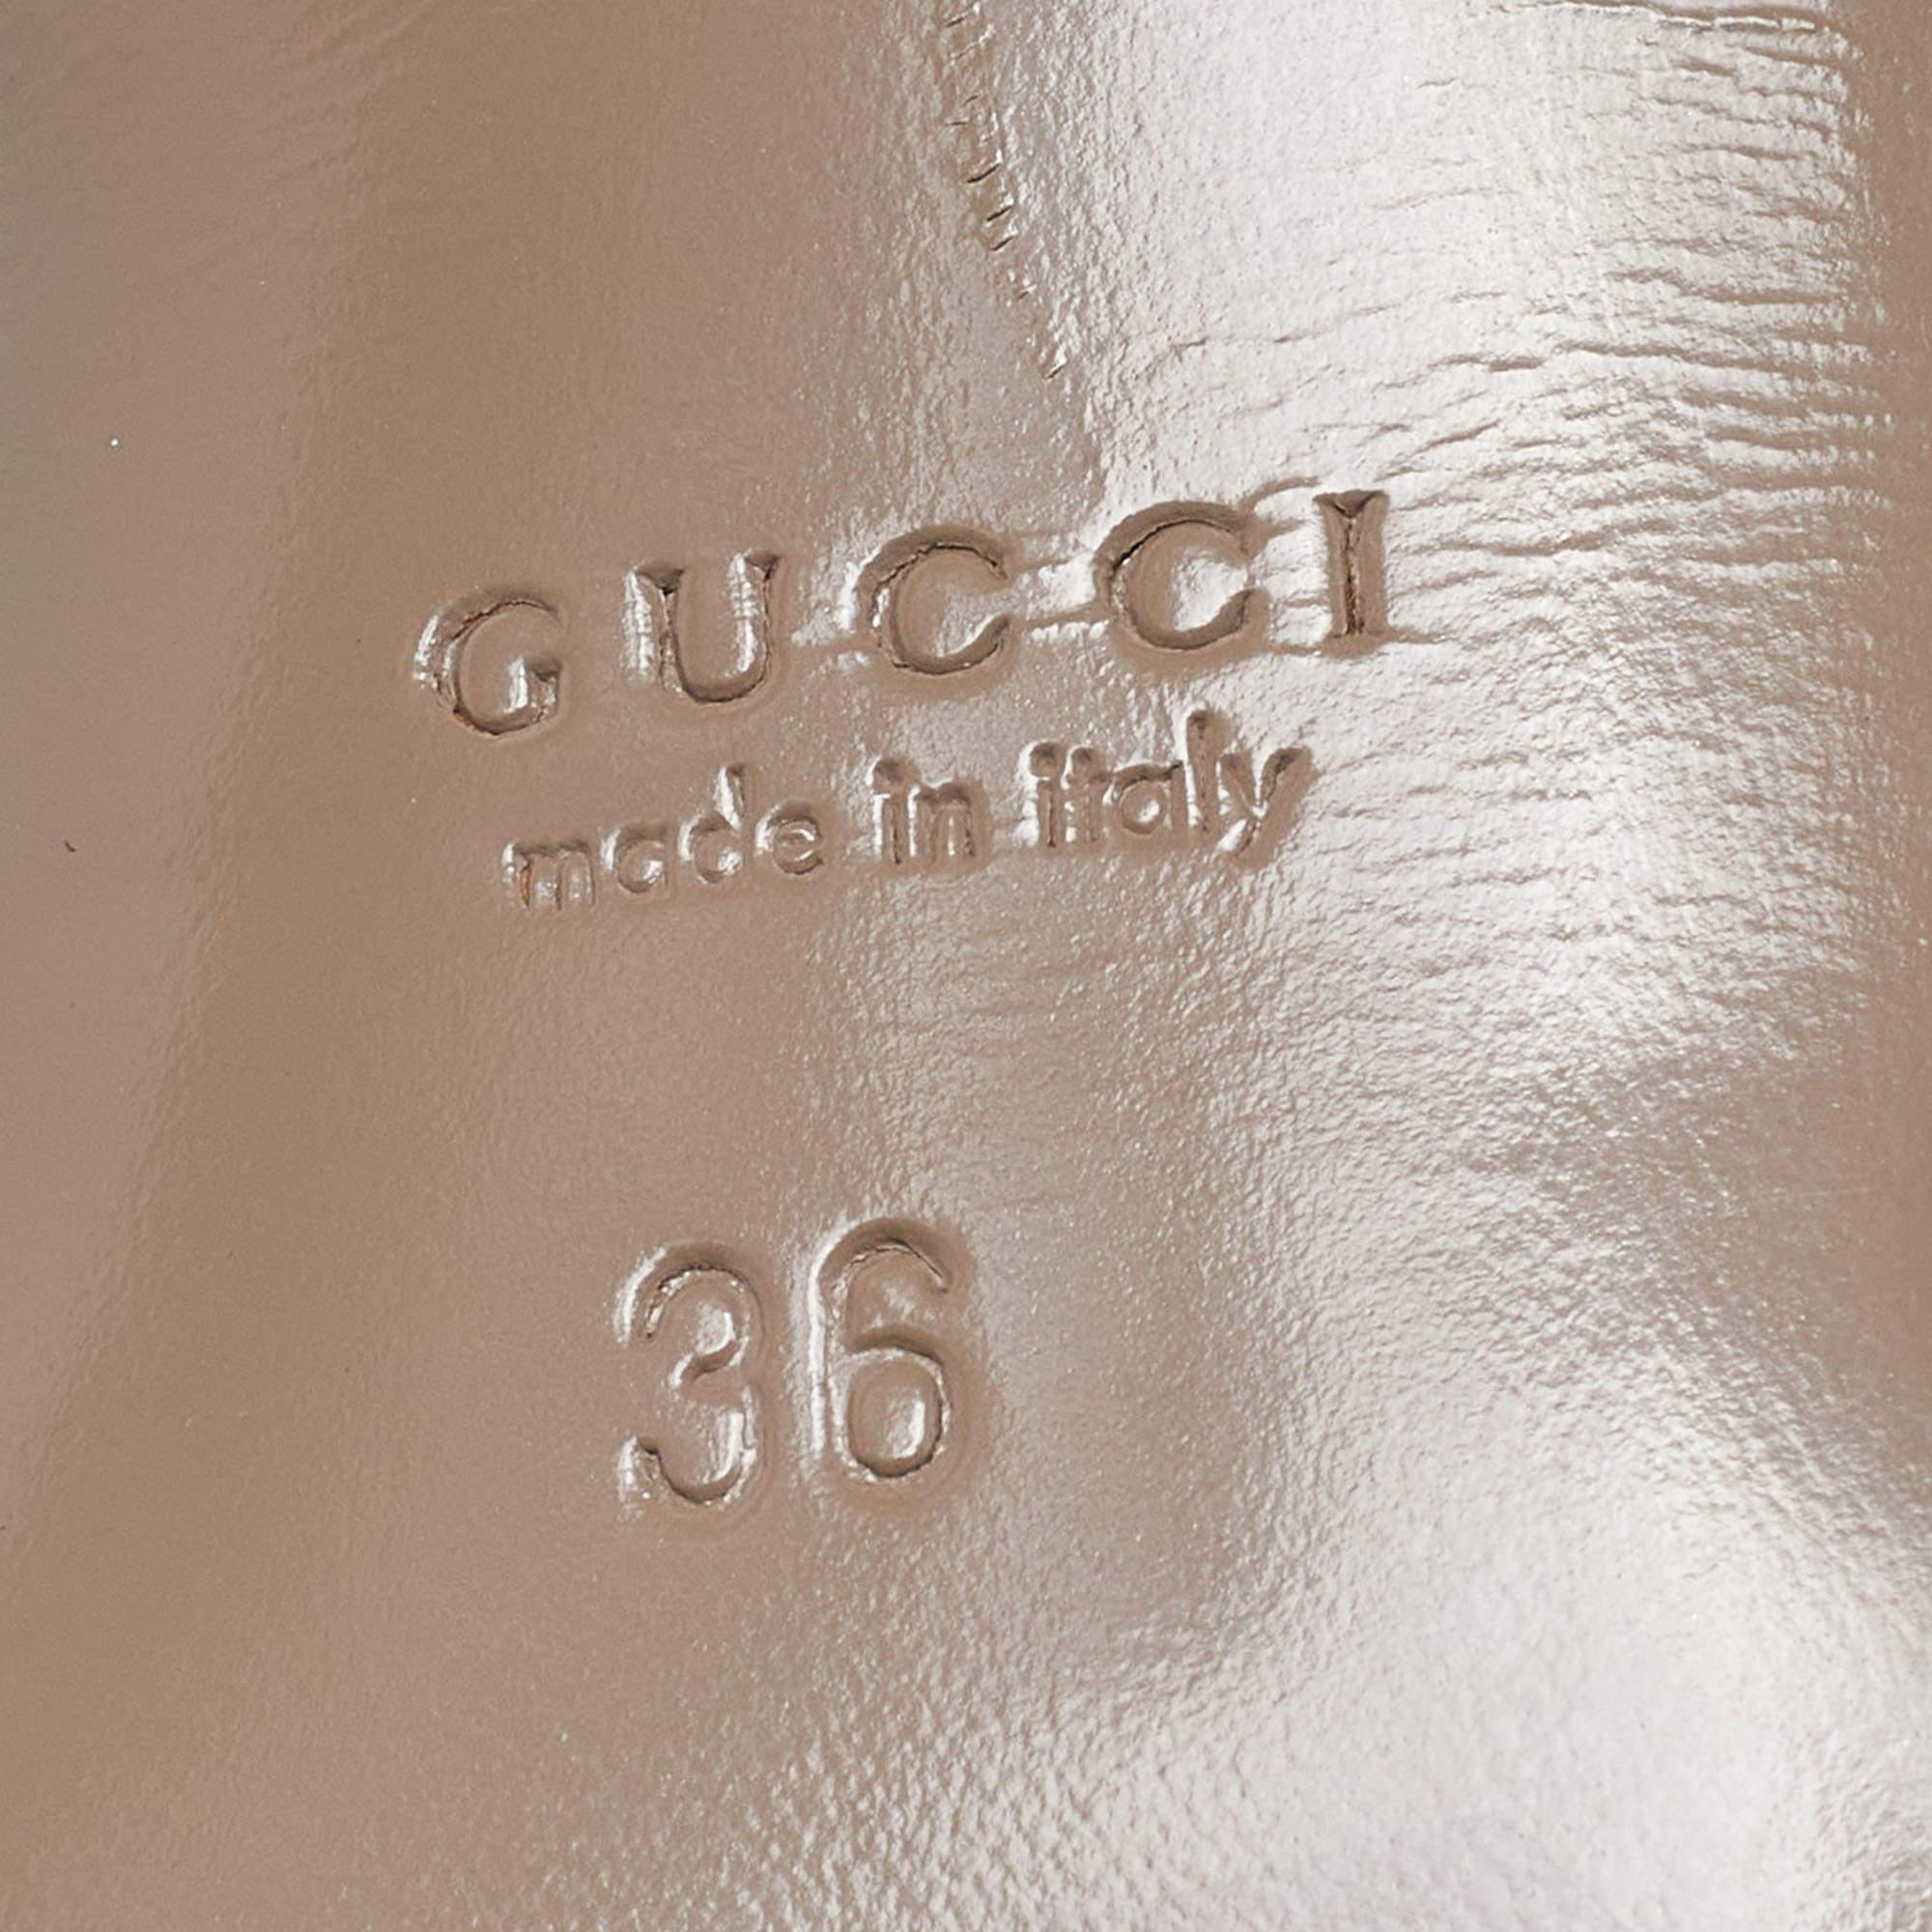 Gucci Cream Patent Leather Ursula Horsebit Gladiator Sandals Size 36 For Sale 1